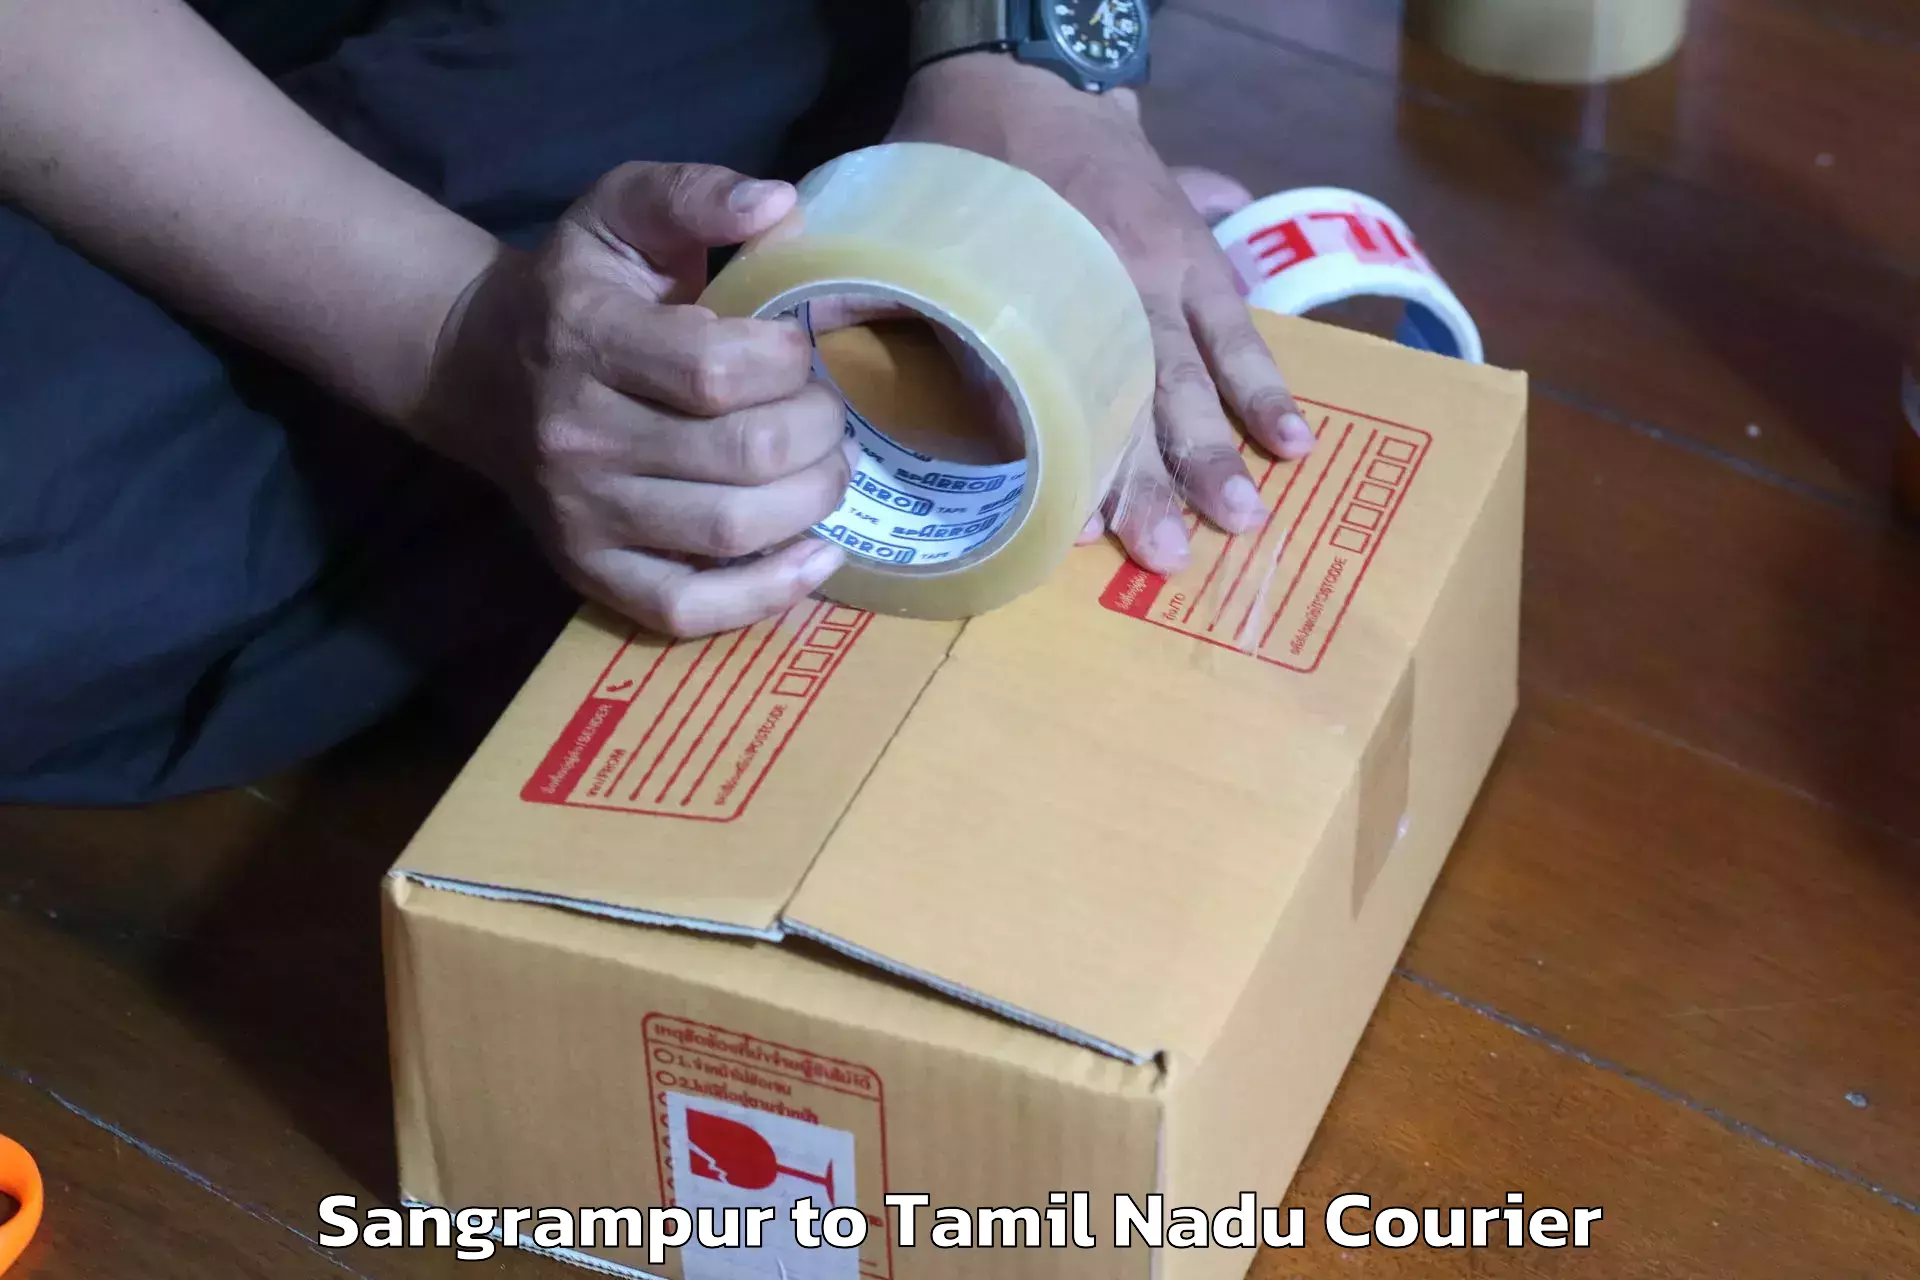 Furniture relocation experts Sangrampur to Tamil Nadu